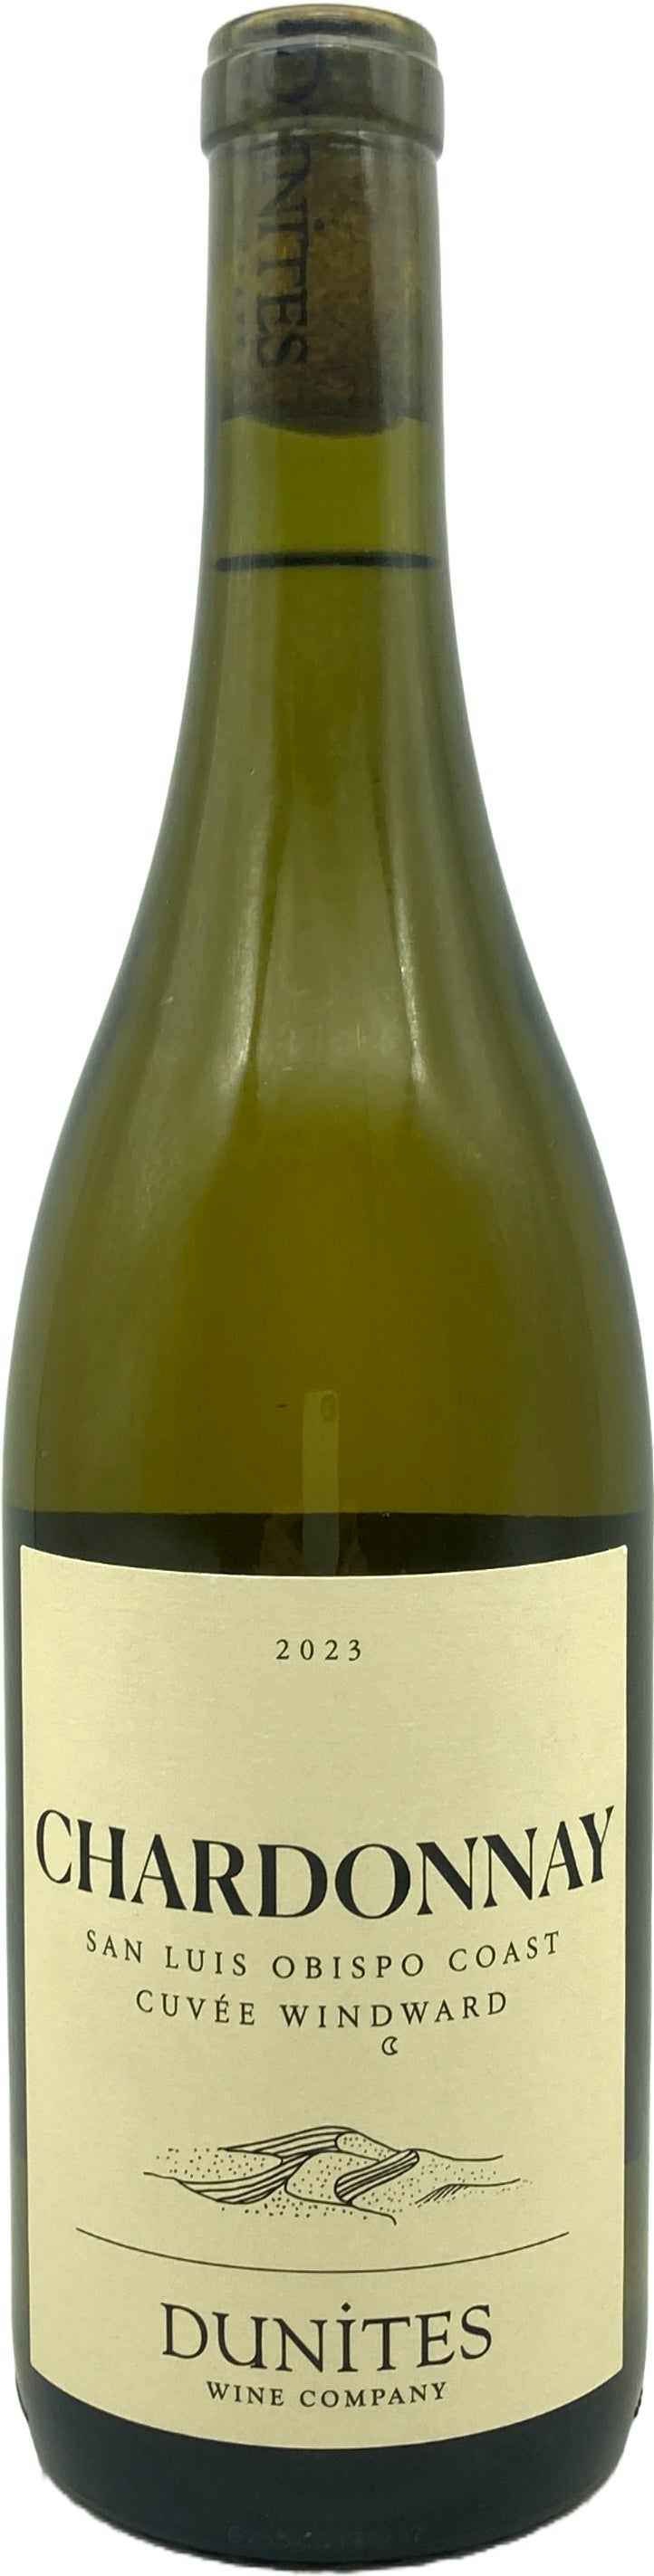 Cuvee Windward Chardonnay 2023